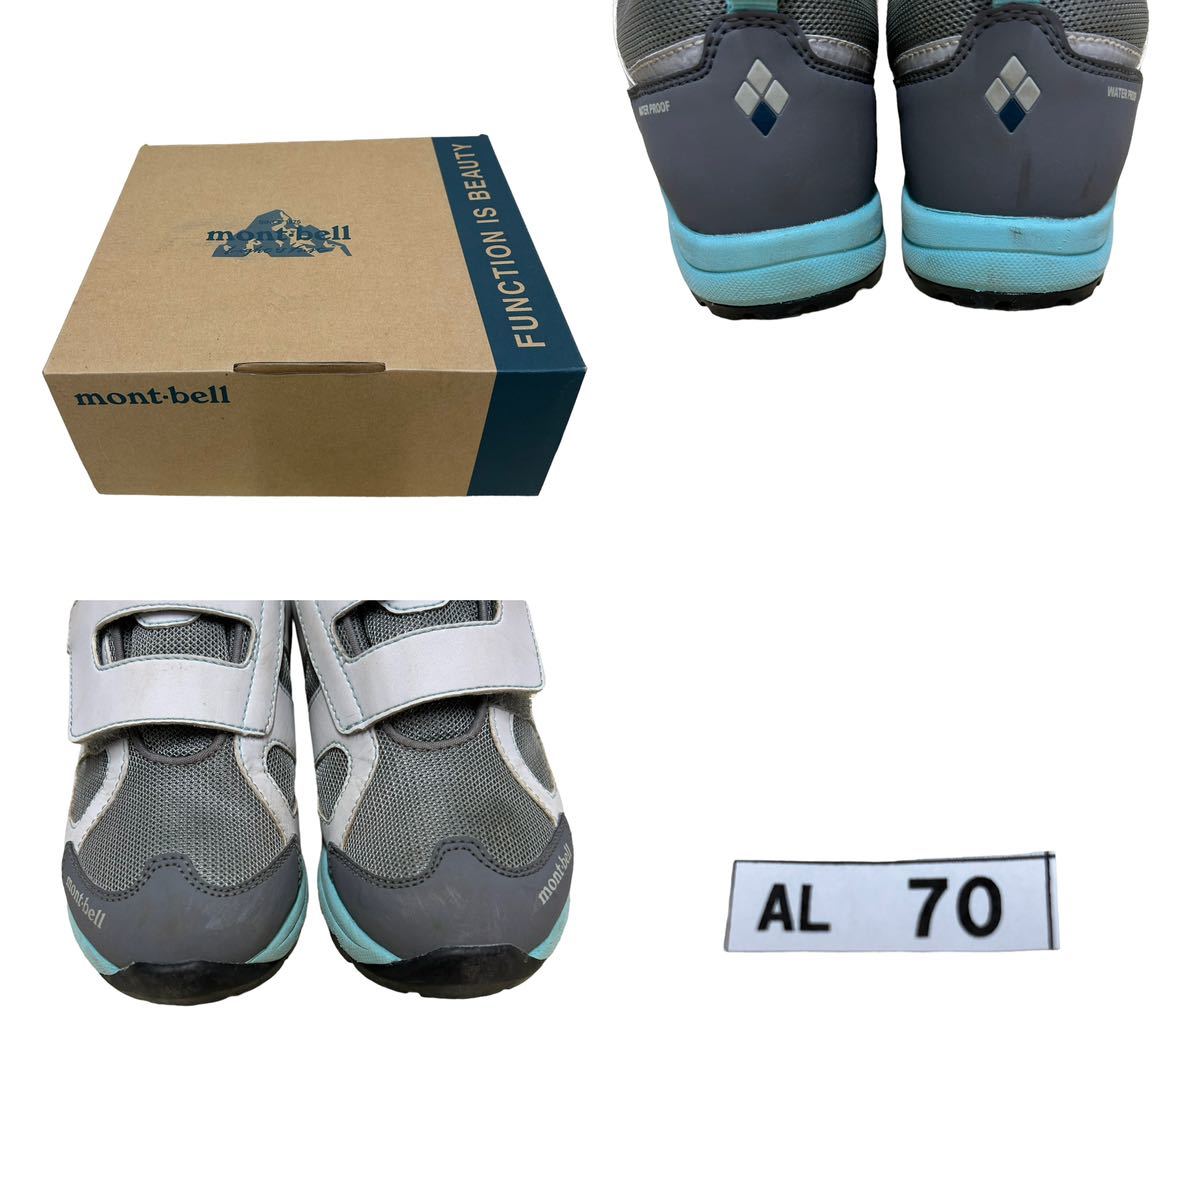 AL070B mont-bell モンベル キッズ スニーカー 靴 シューズ 20cm グレー 水色 マジックテープ 箱付きの画像10